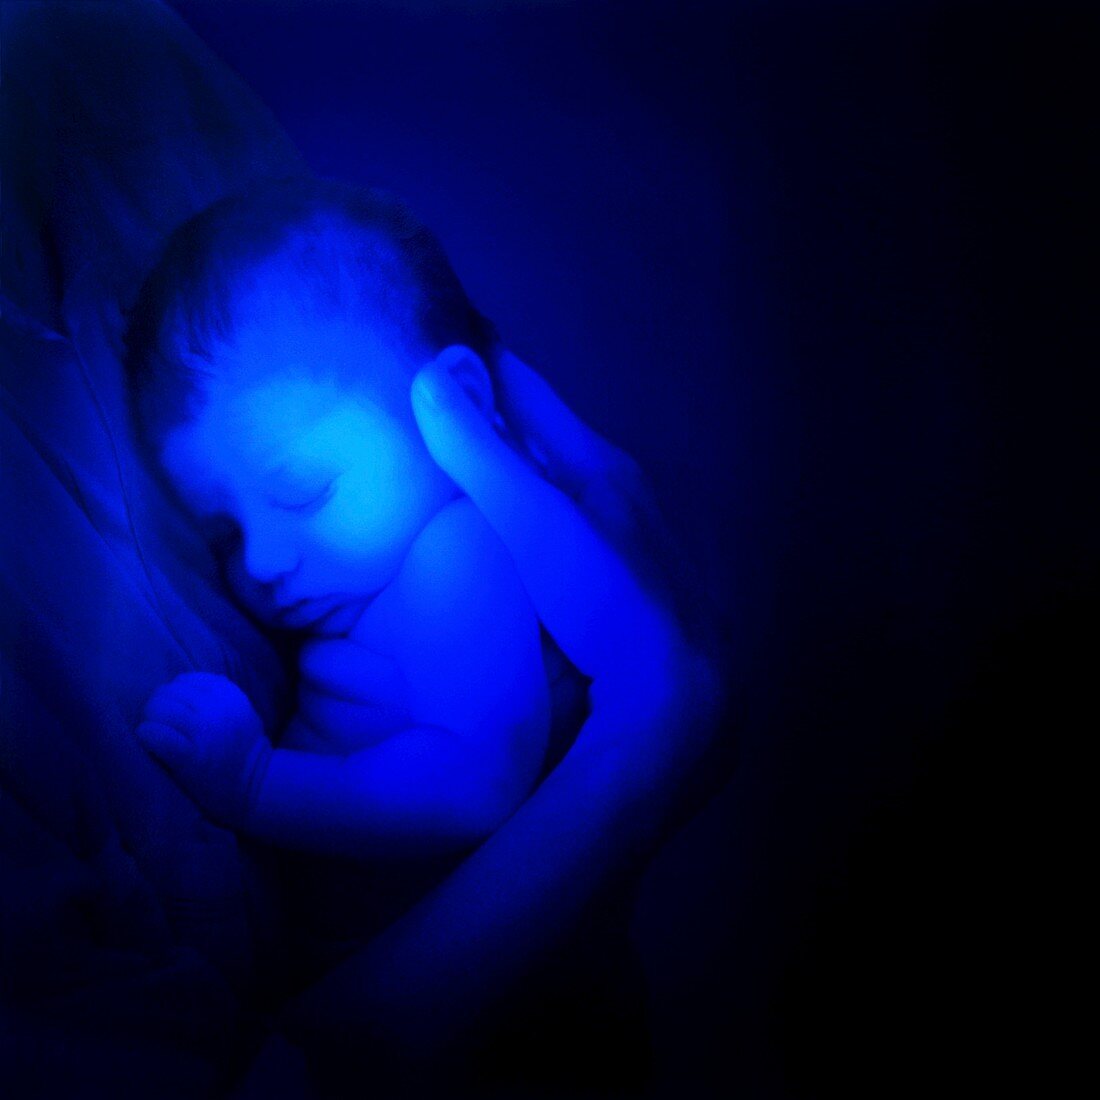 Sleeping baby under blue light